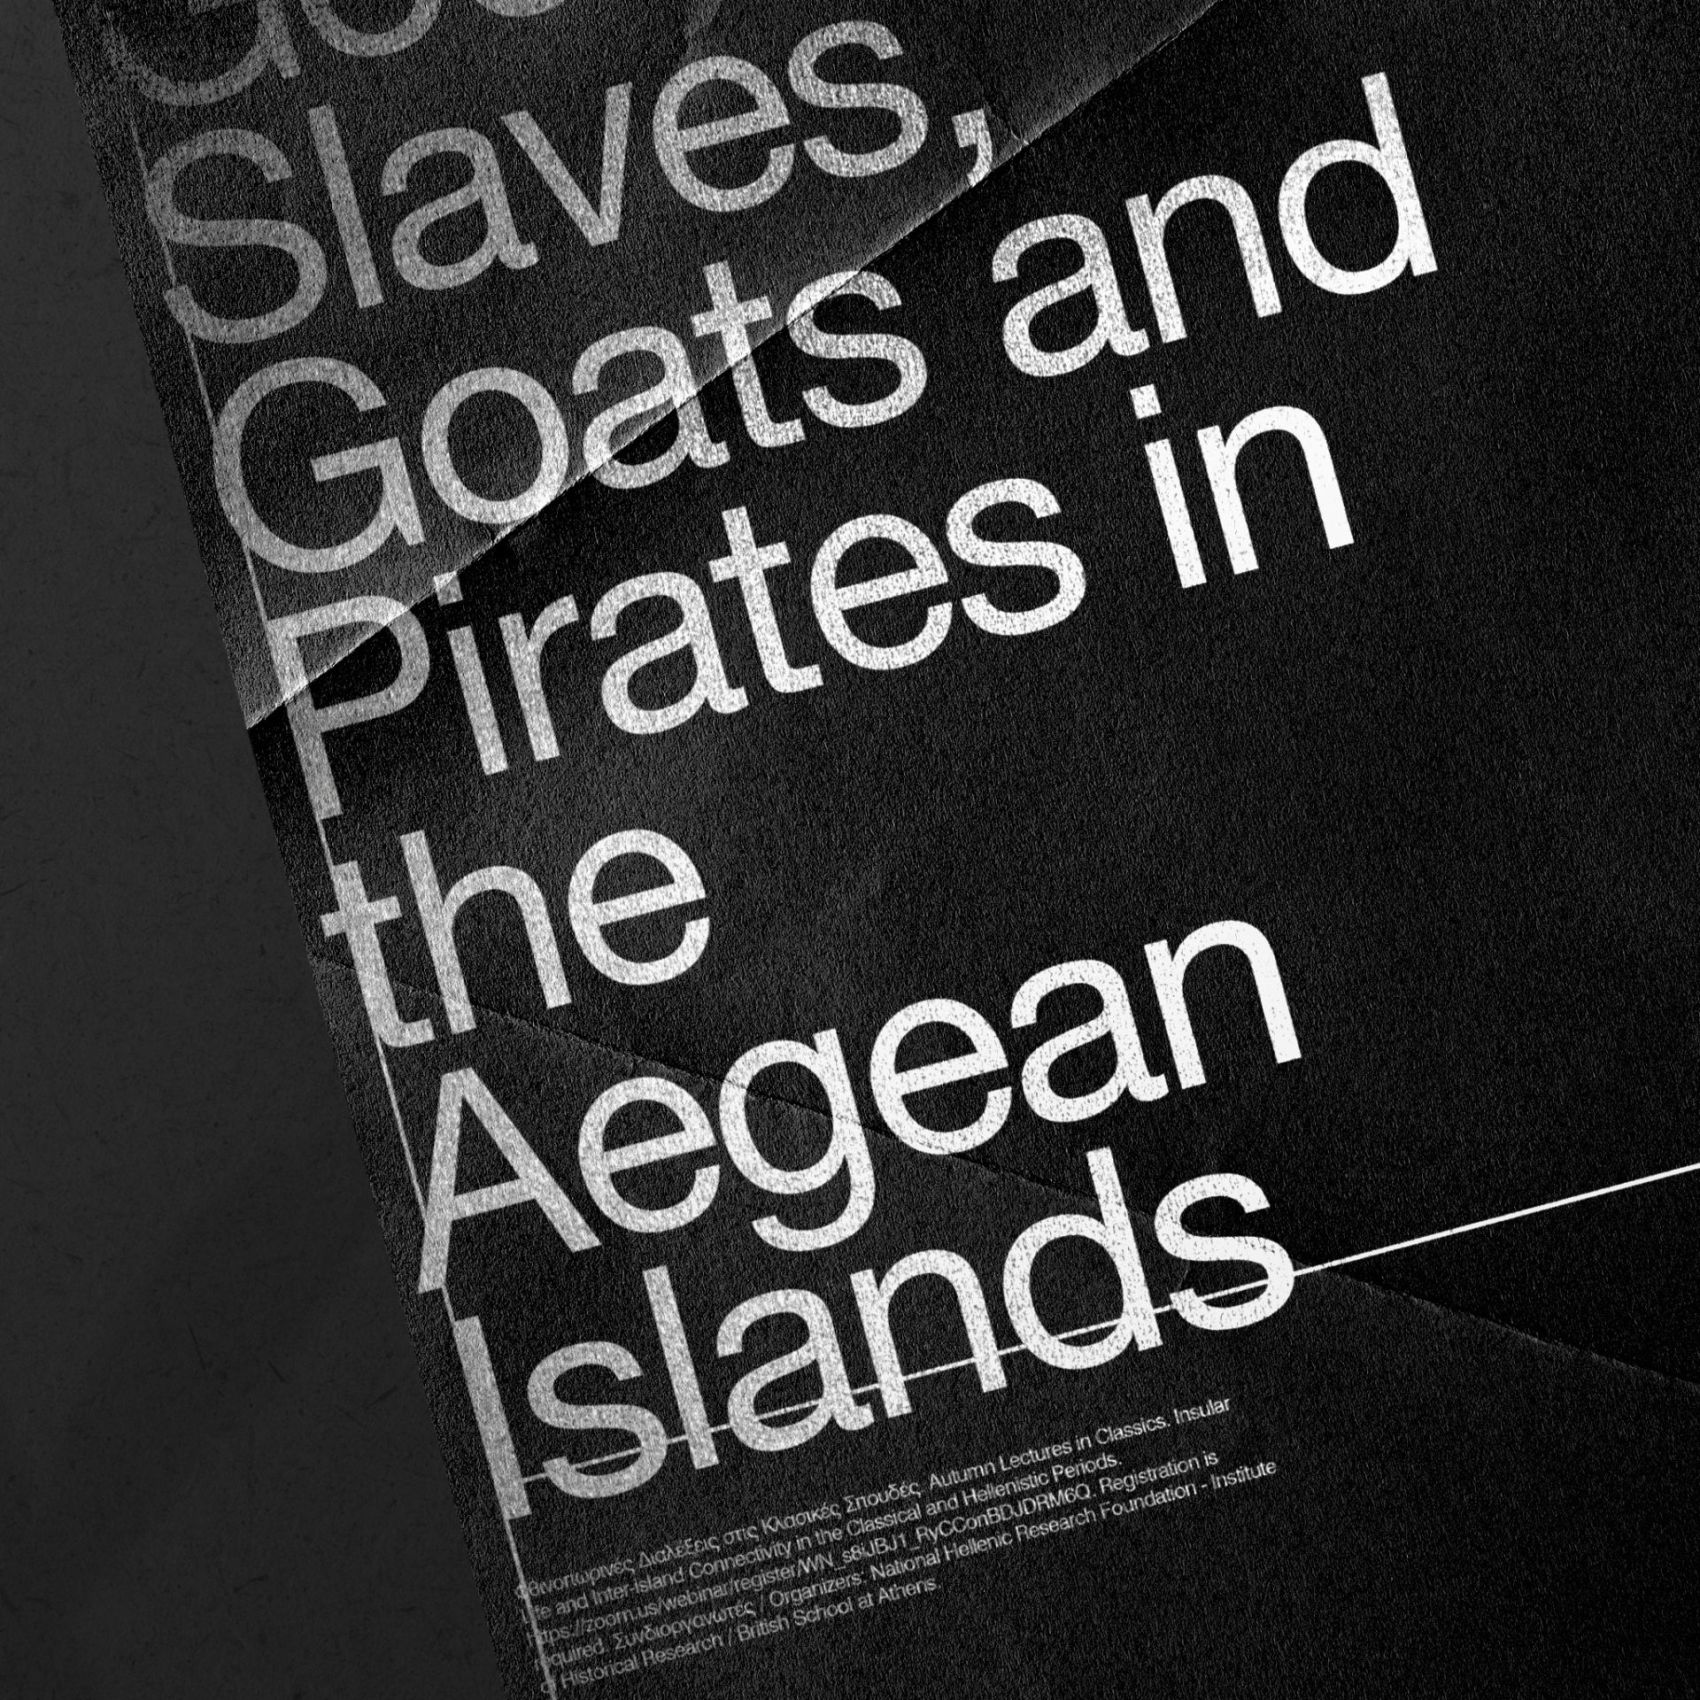 gods-slaves-goats-and-pirates-communication-design